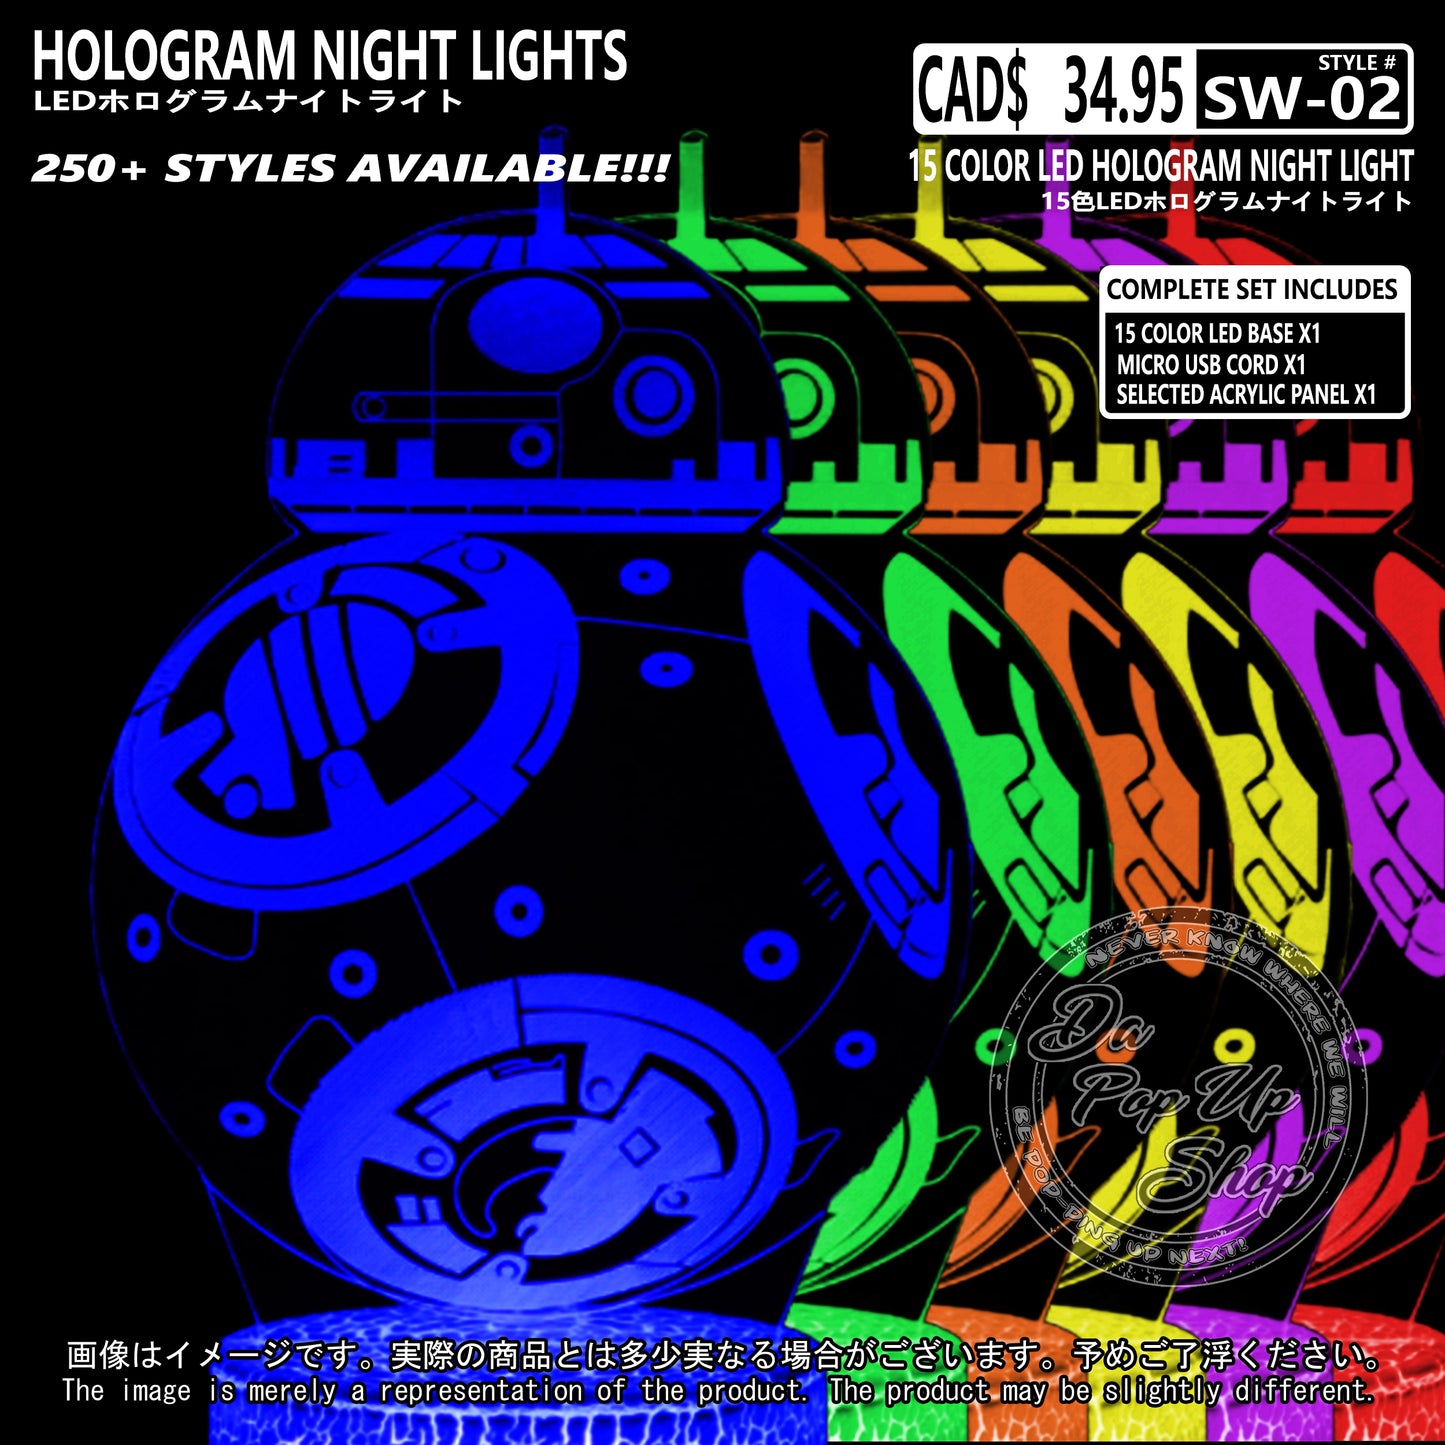 (SW-02) BB-8 Star Wars Hologram LED Night Light